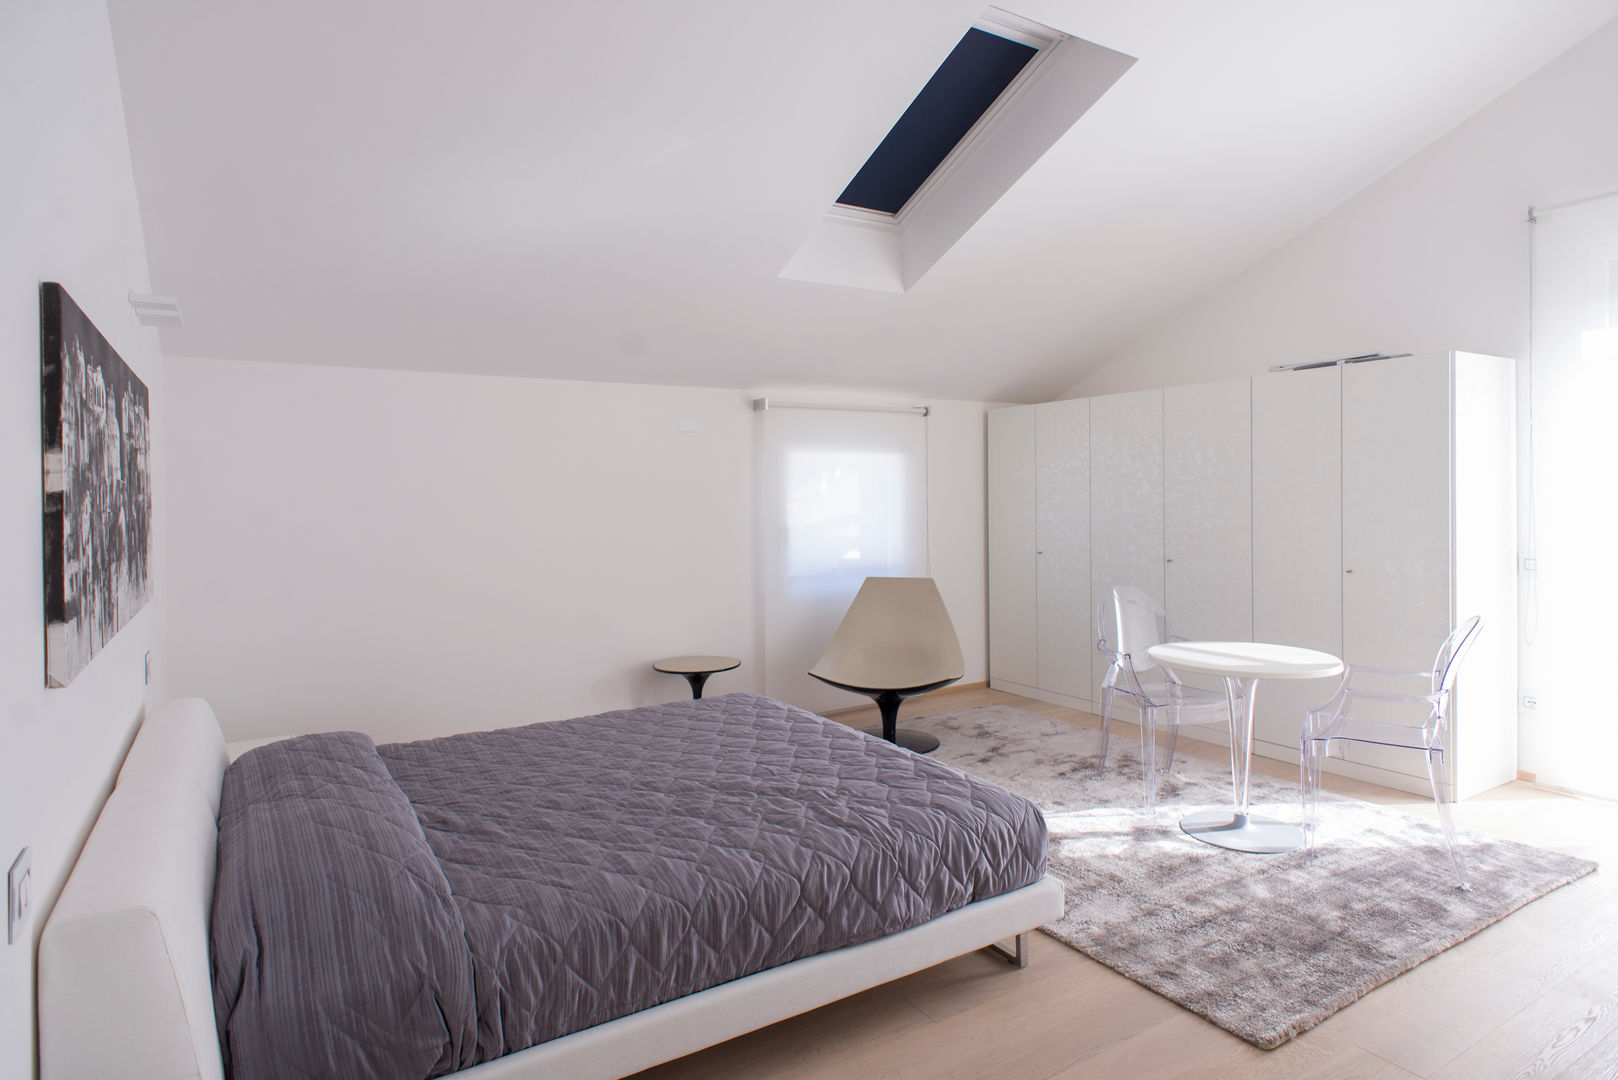 Residenza al mare 2014, Andrea Tommasi Andrea Tommasi Modern style bedroom Beds & headboards